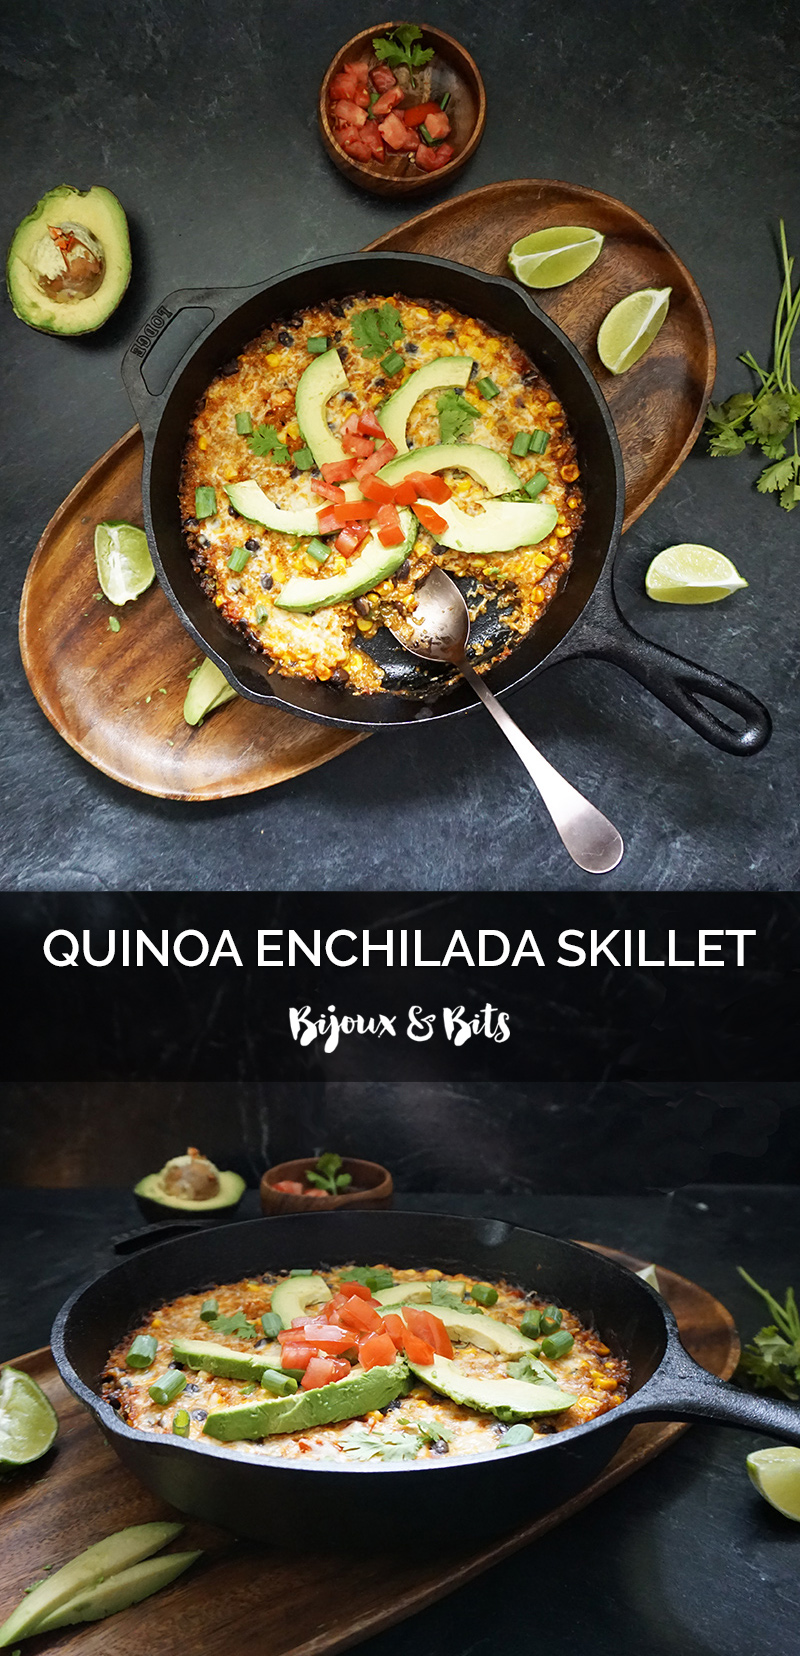 Quinoa enchilada skillet recipe from @bijouxandbits